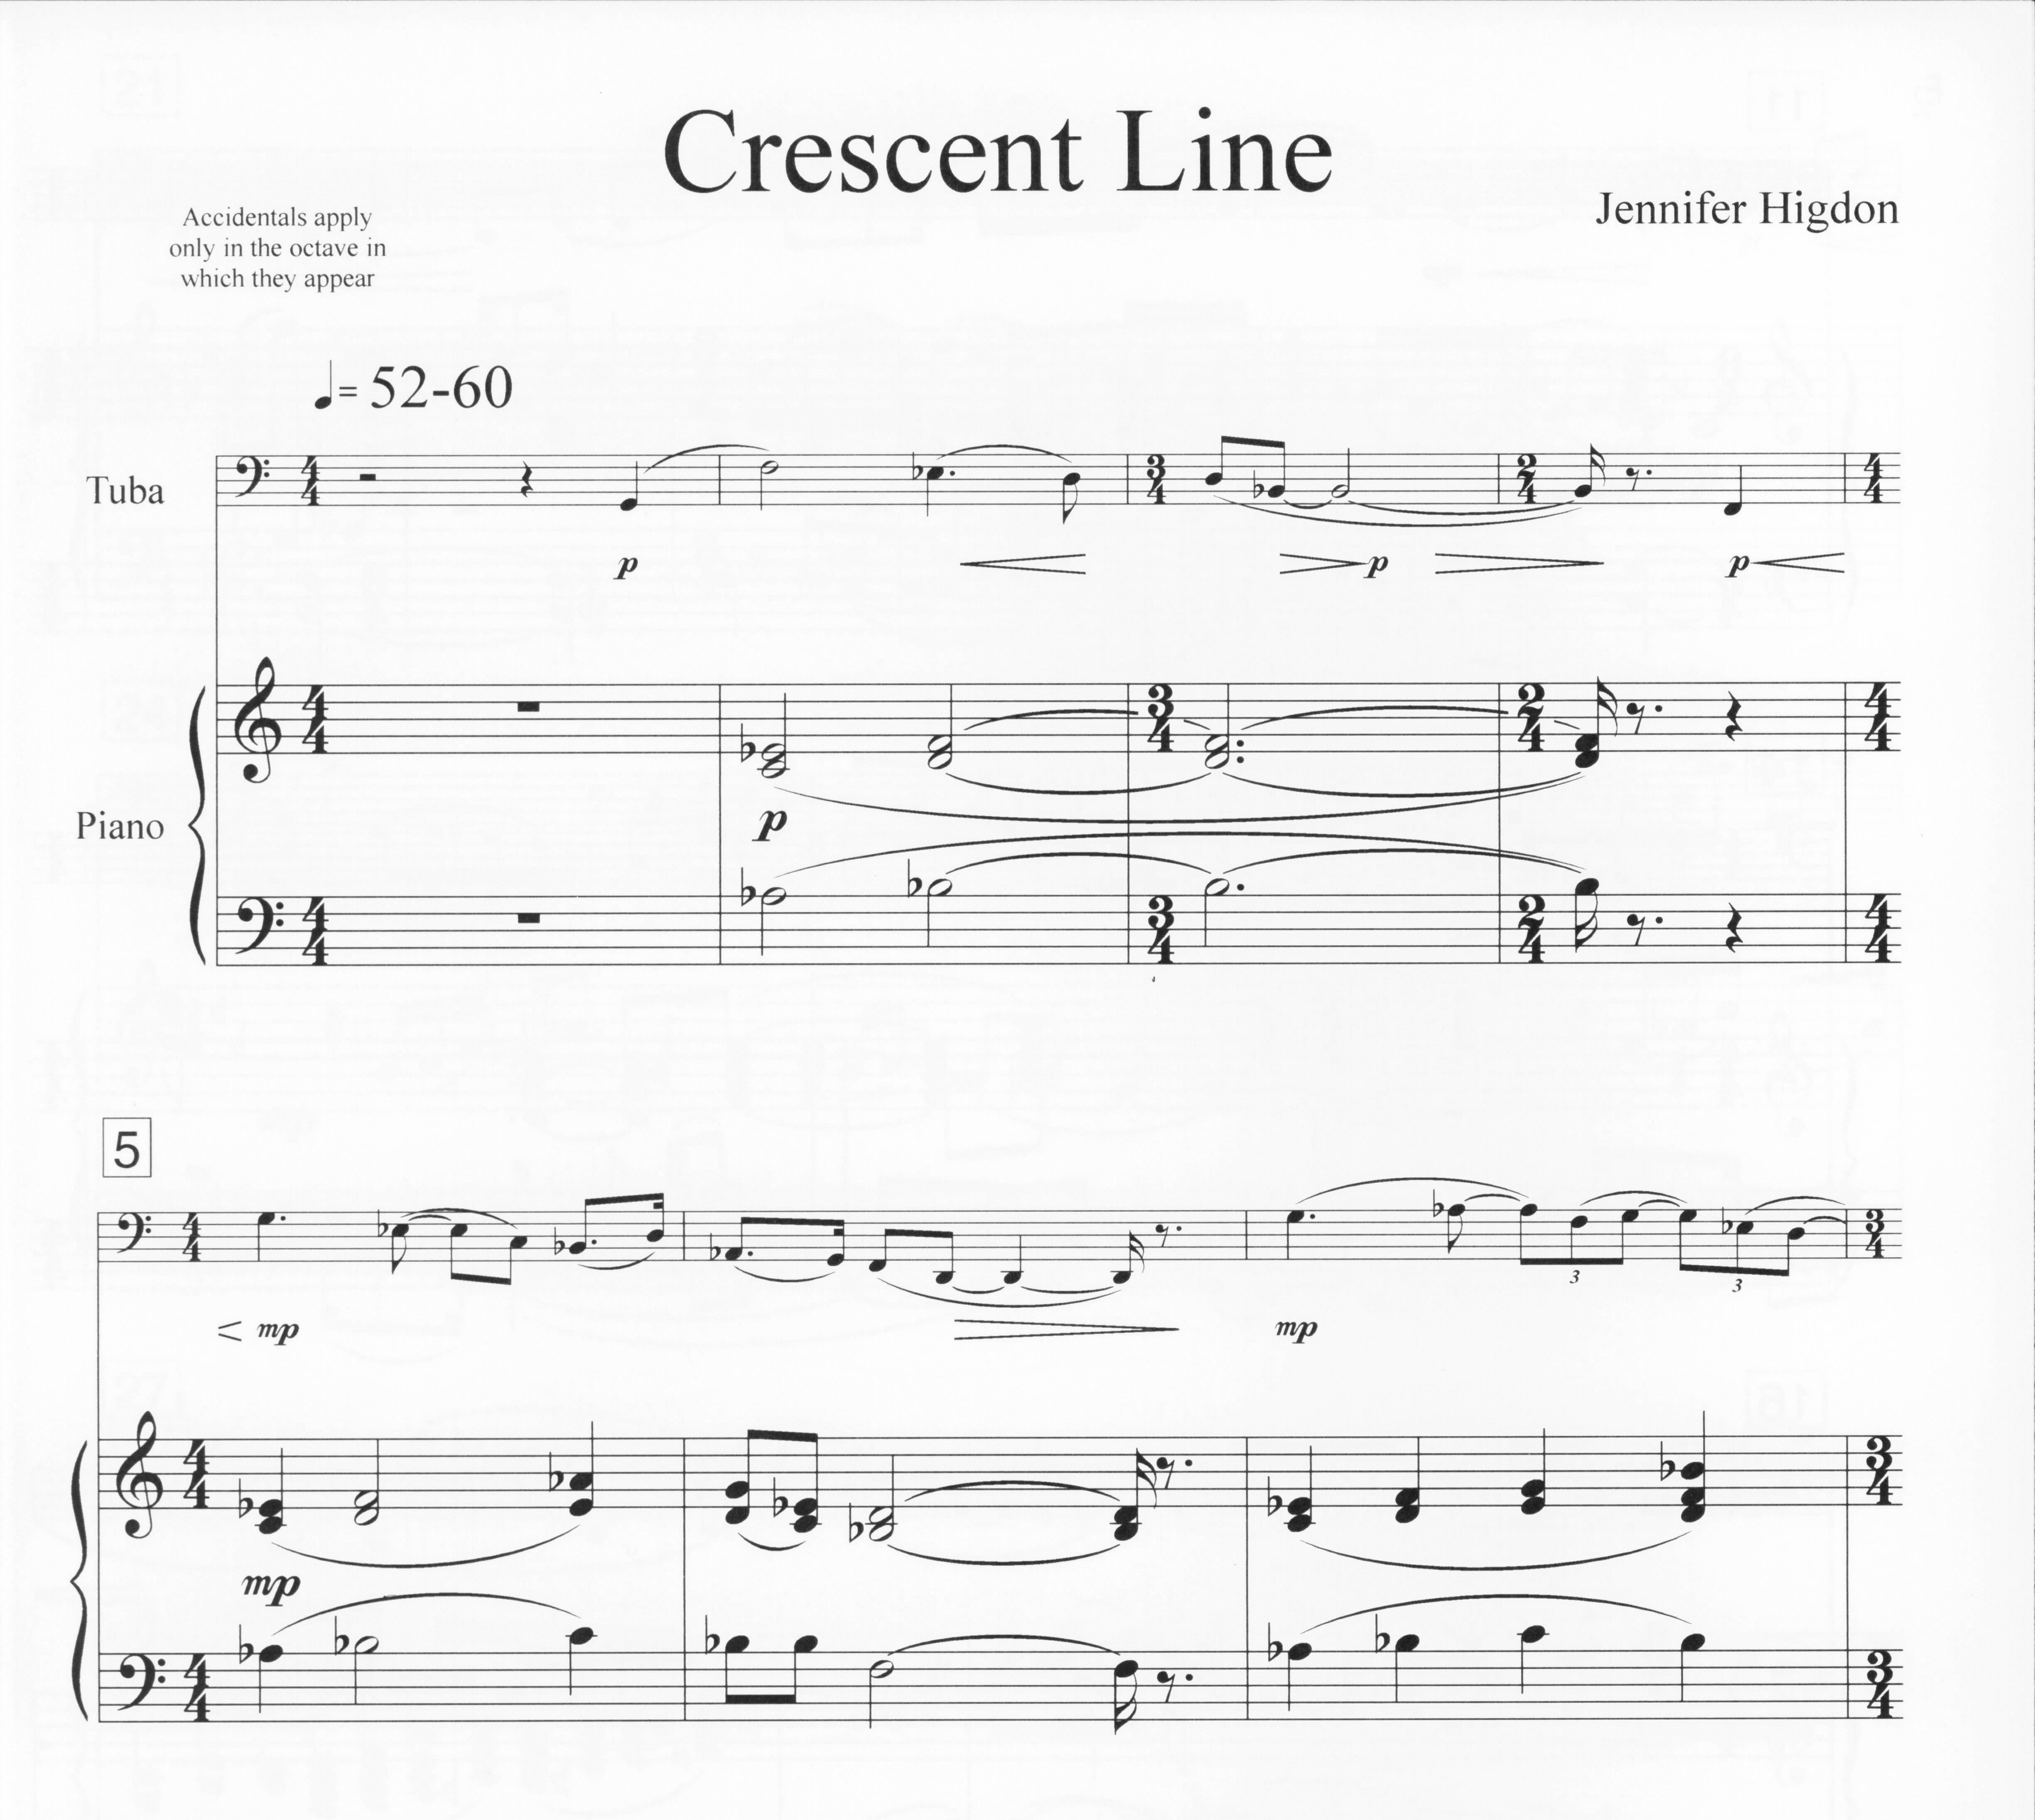 Crescent Line